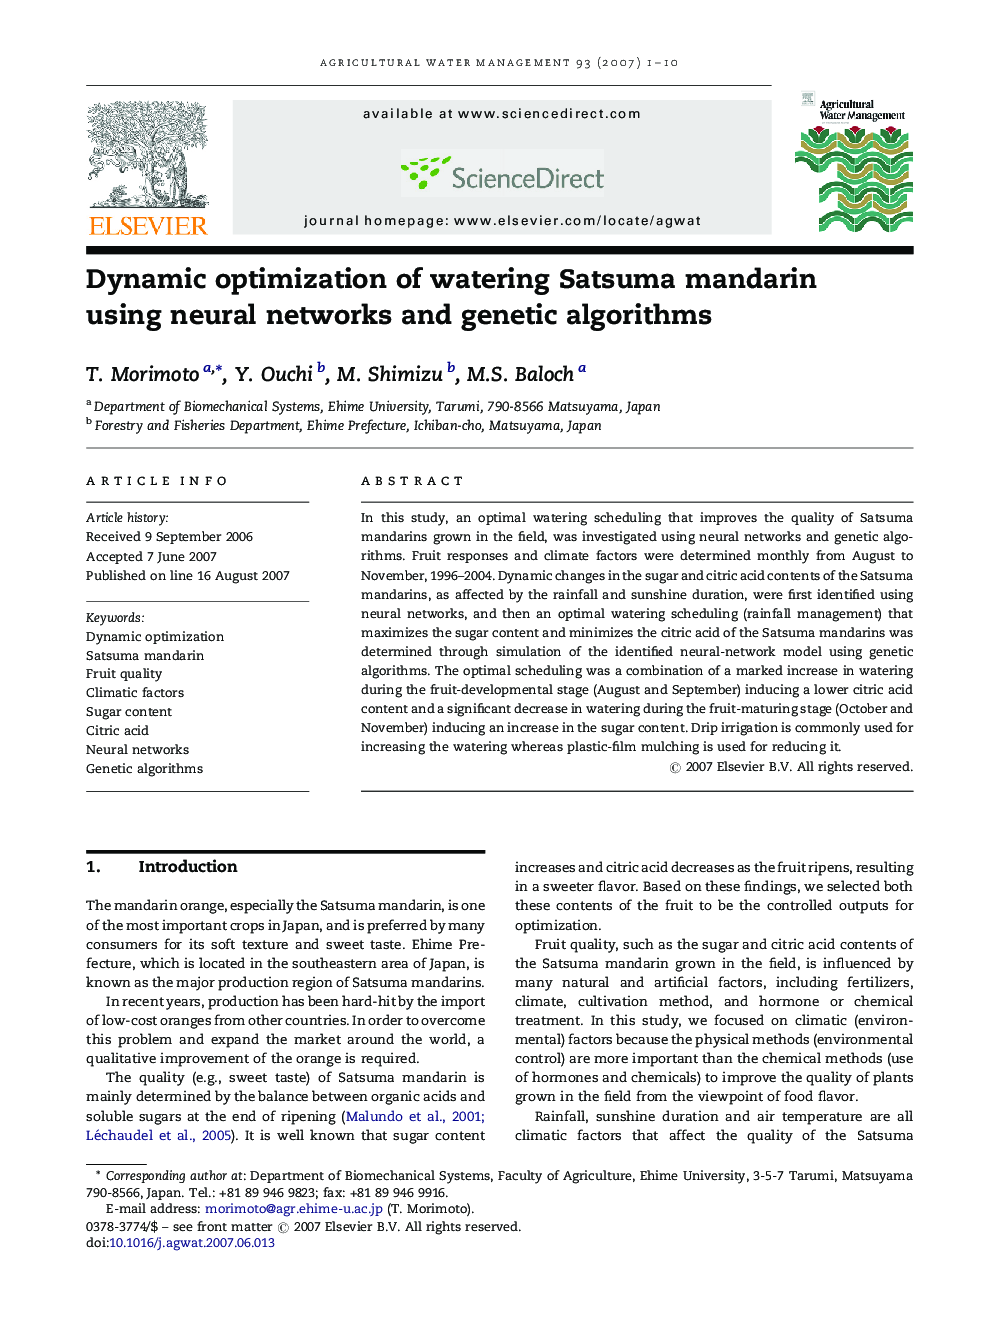 Dynamic optimization of watering Satsuma mandarin using neural networks and genetic algorithms